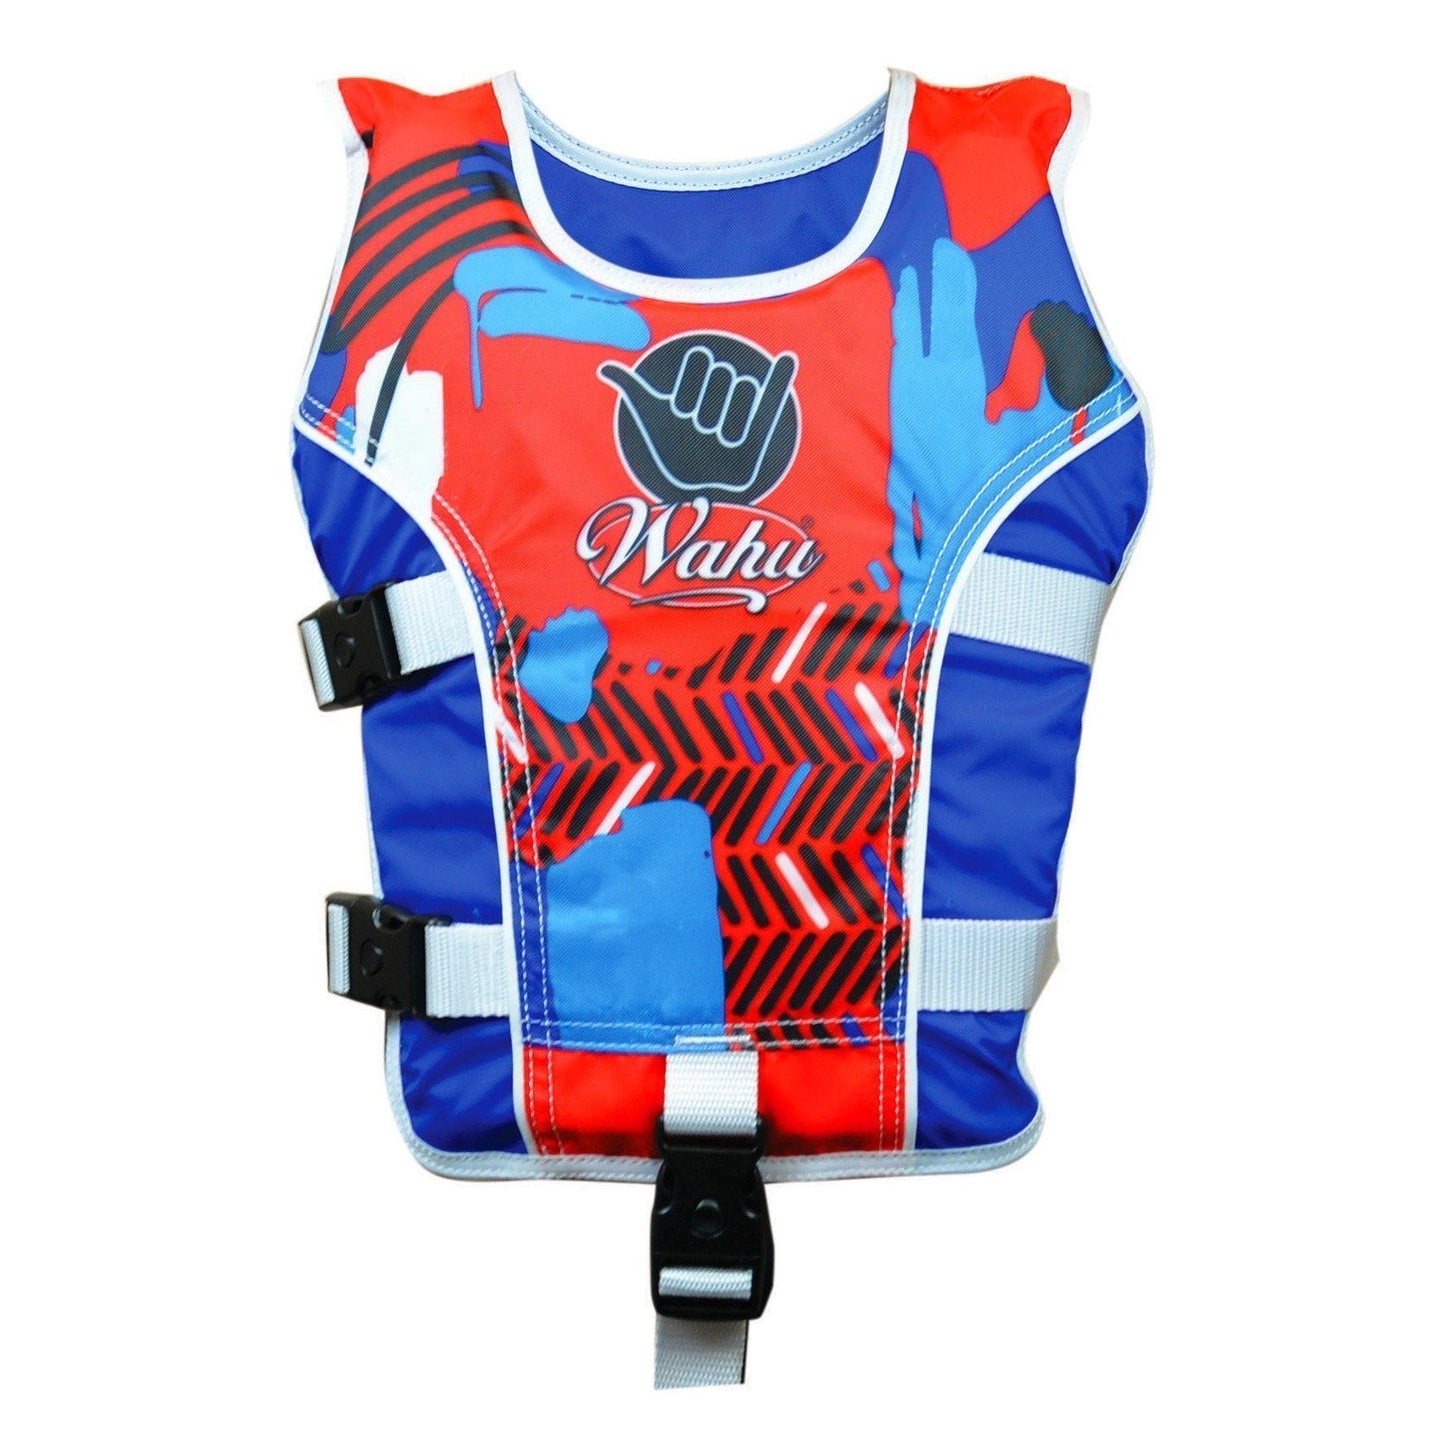 Wahu Swim Vest - Medium-Red-Yarrawonga Fun and Games